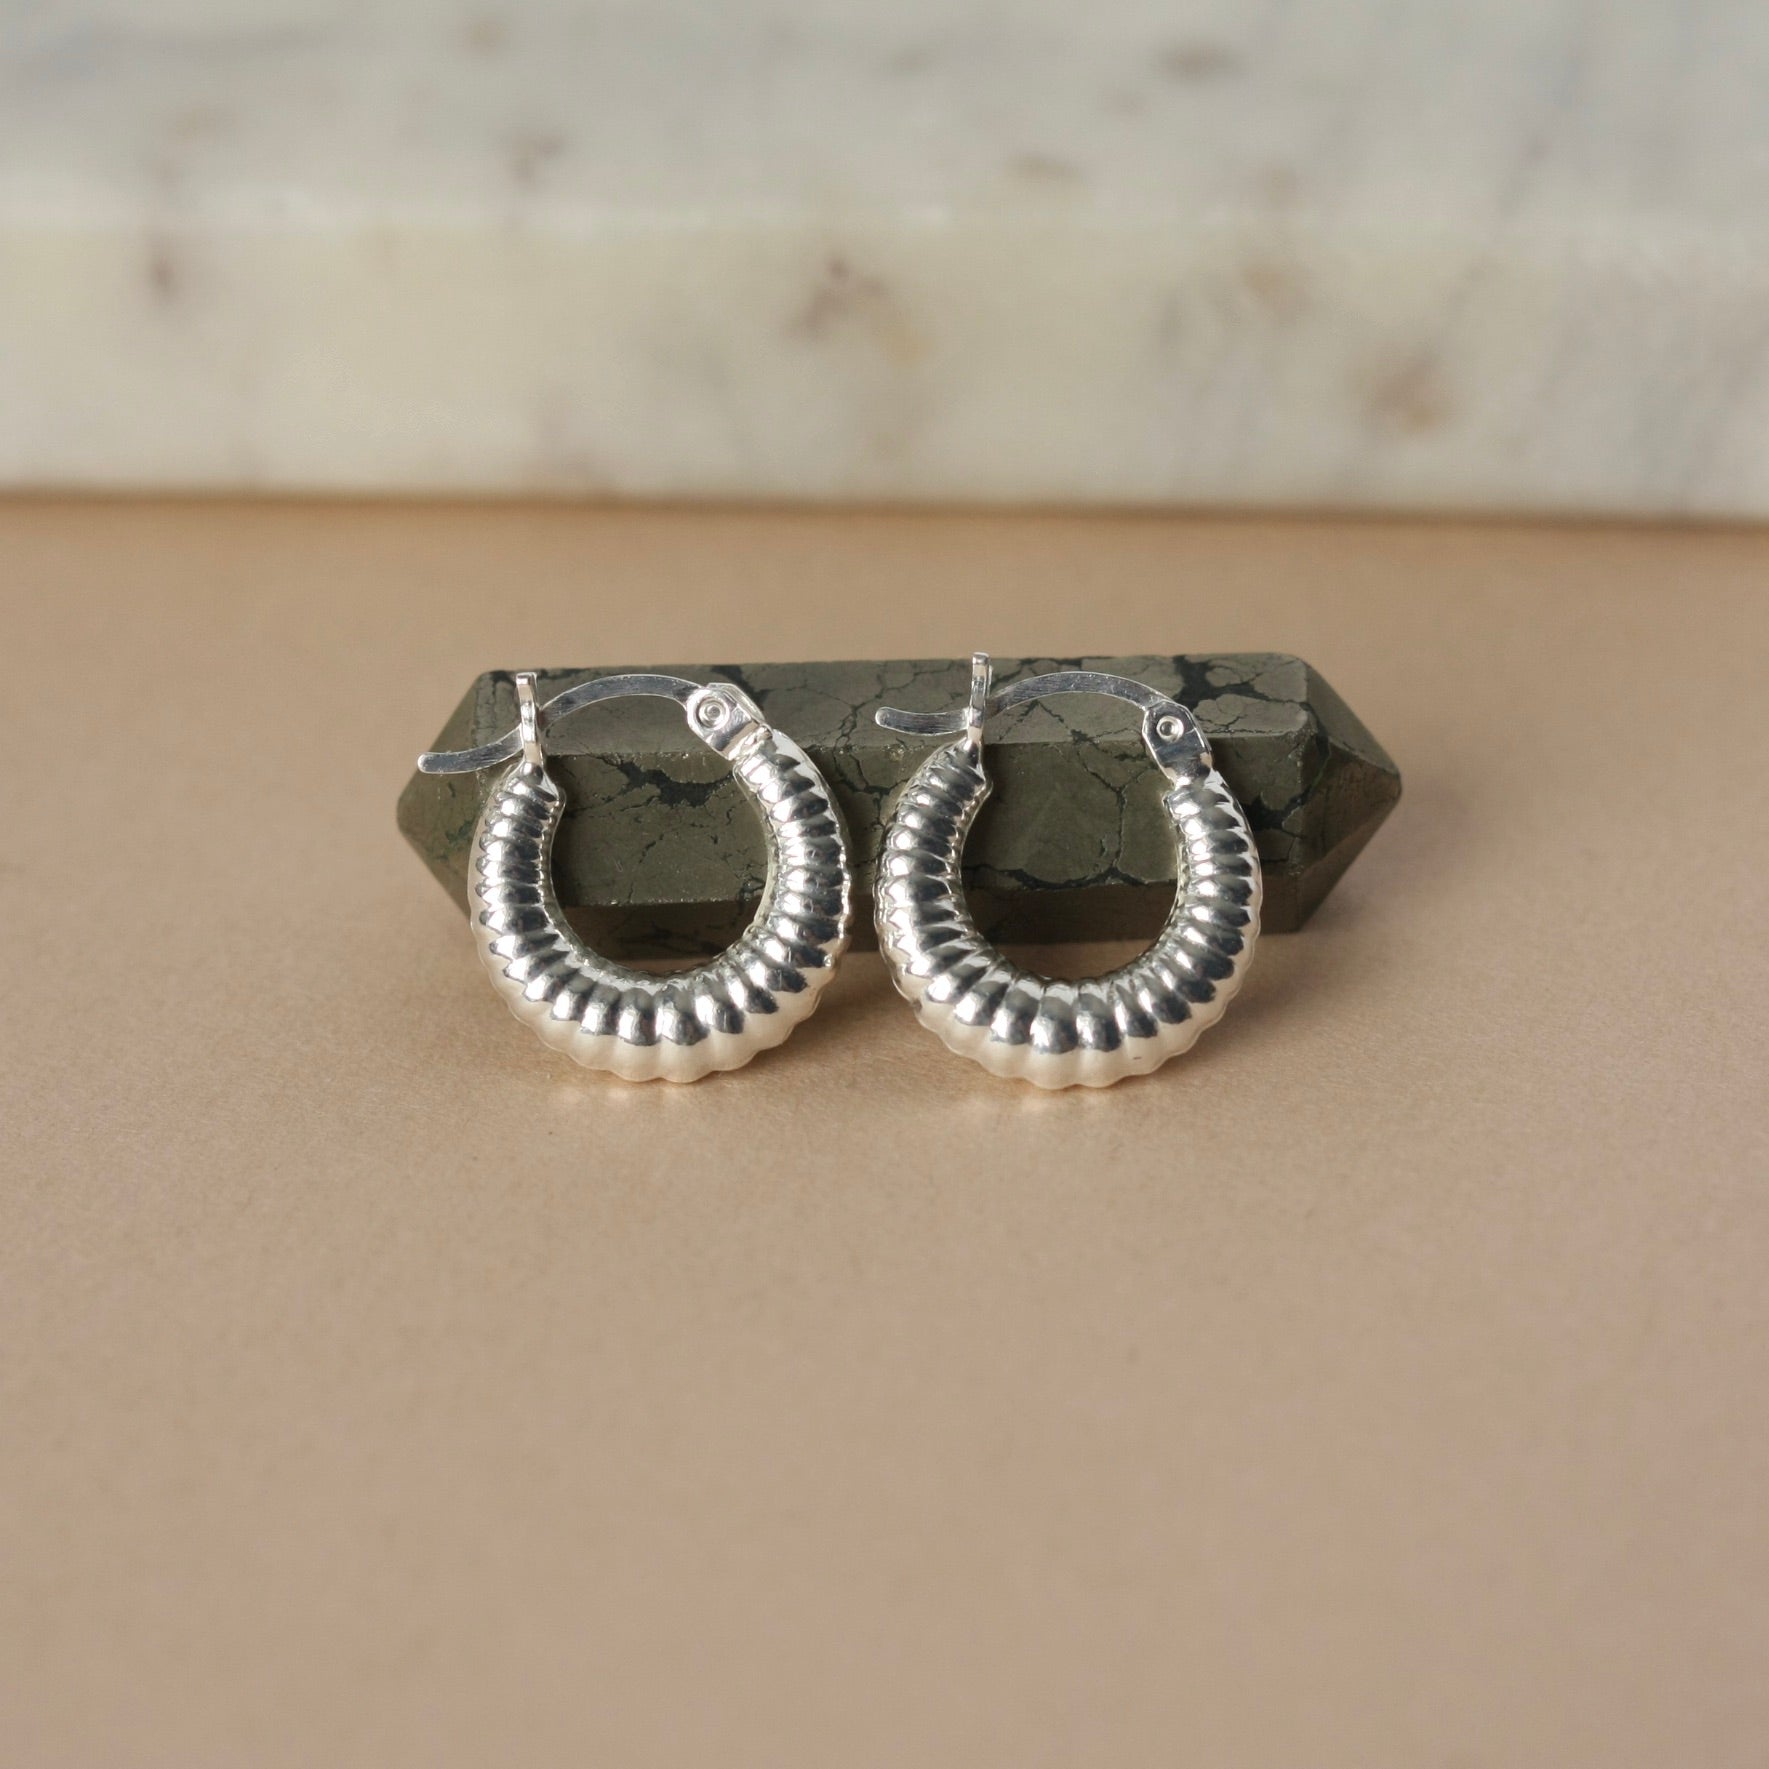 Staple Small Hoops – ALCO Jewelry